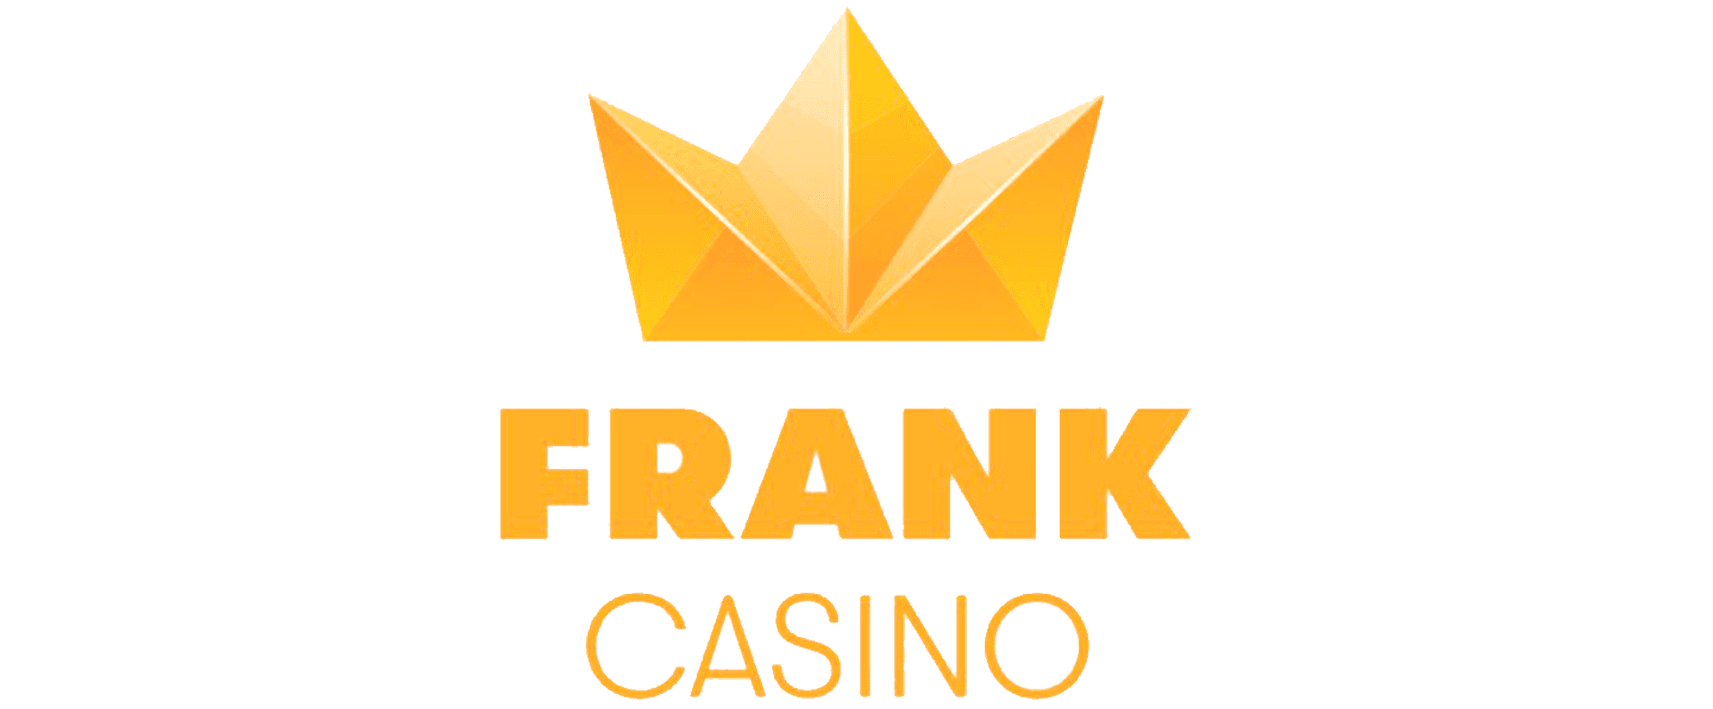 Online casino sports betting